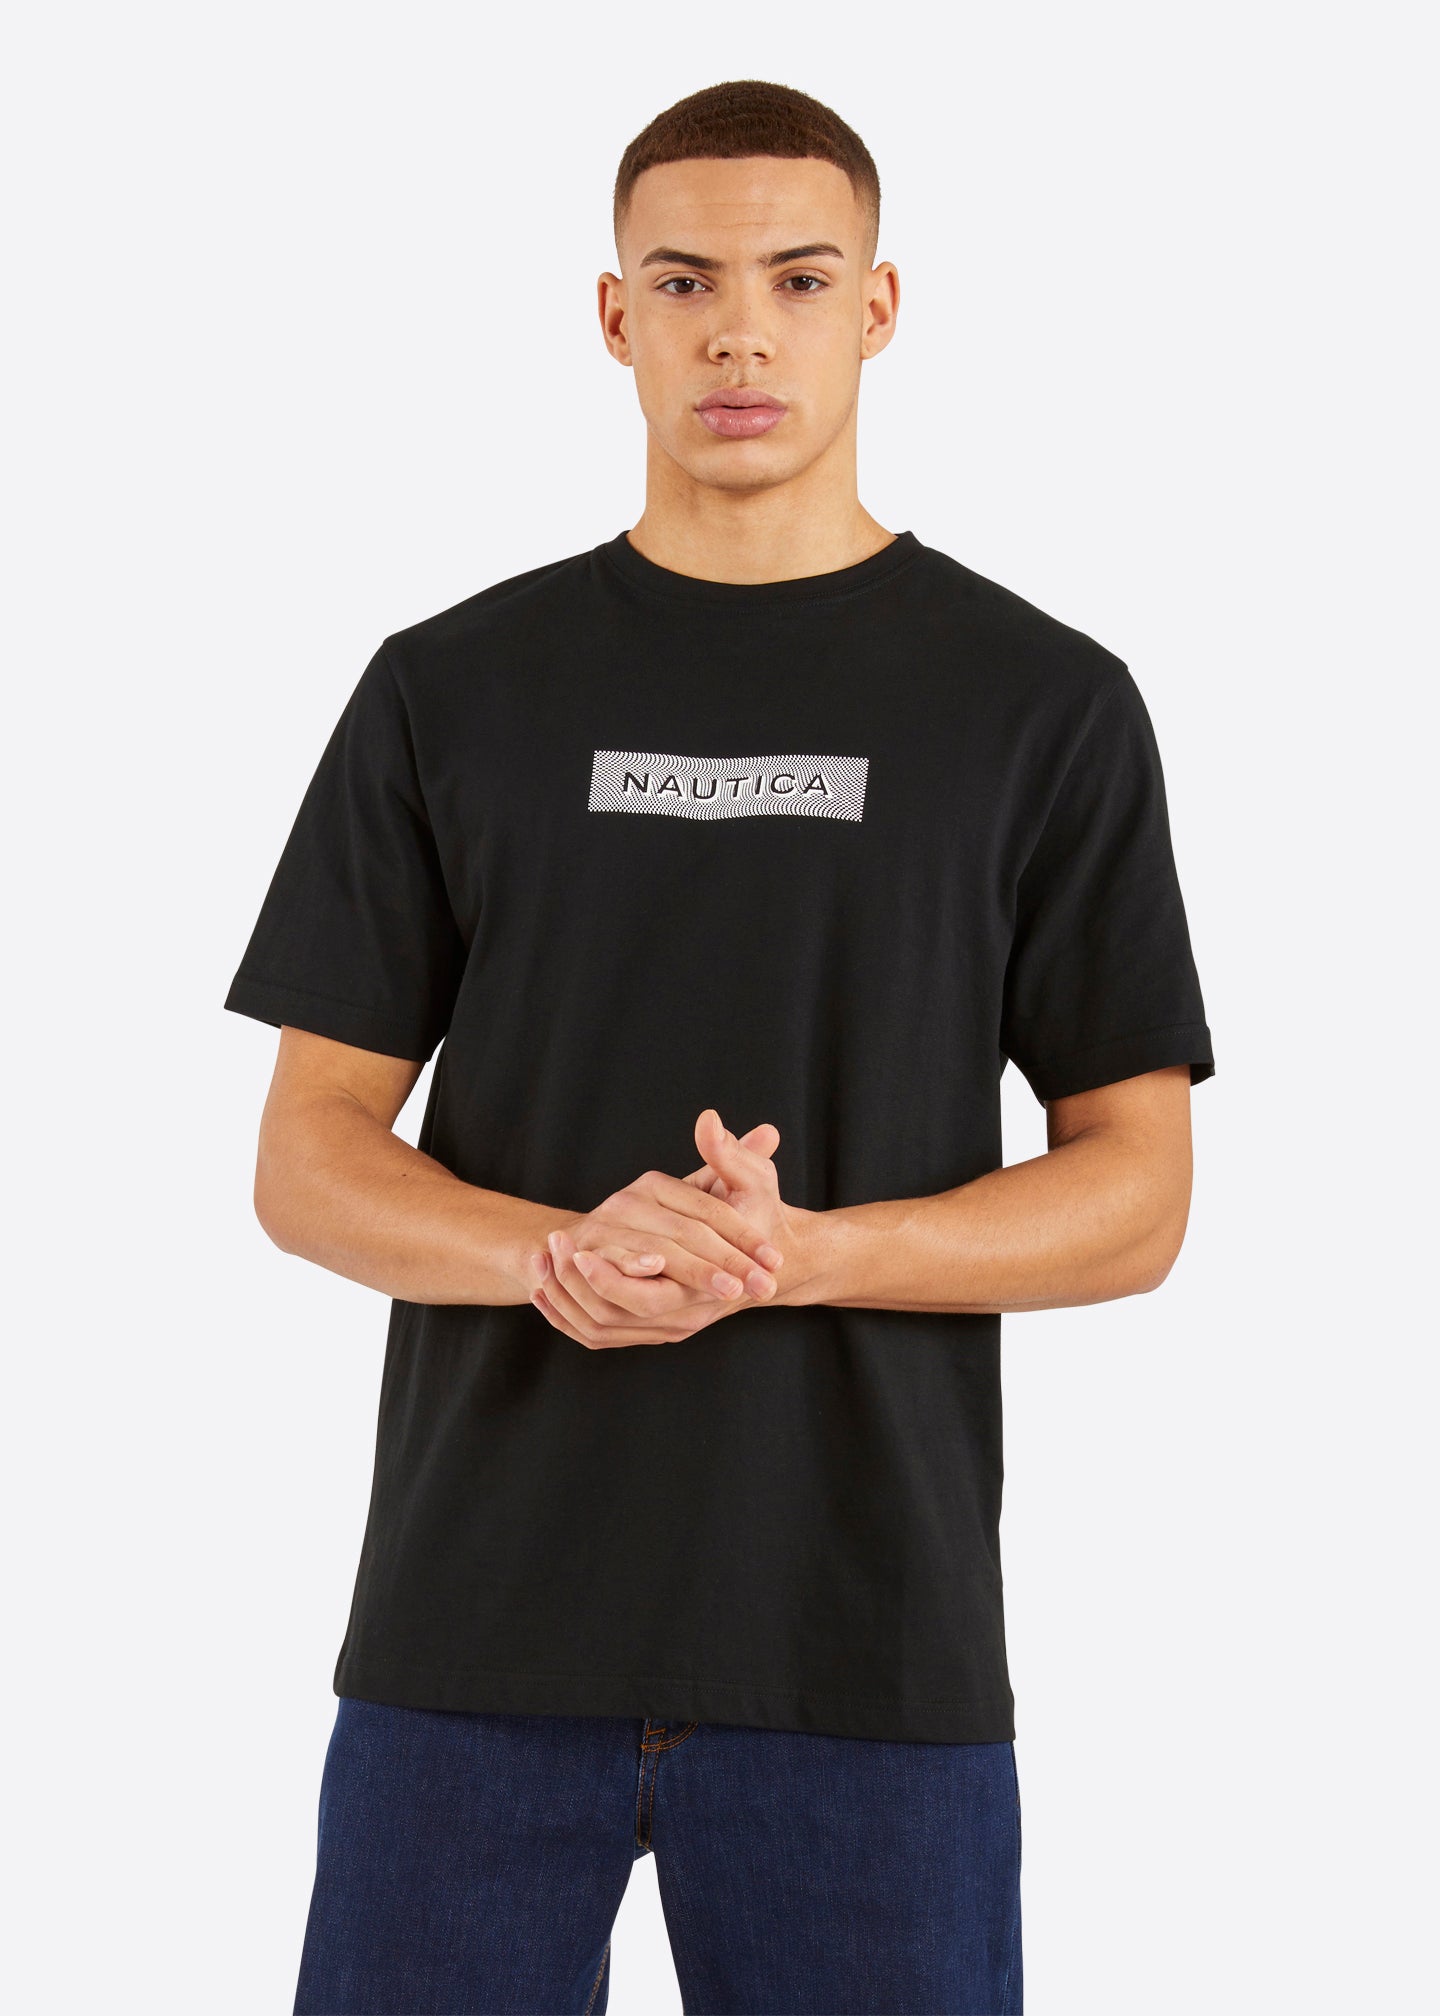 Nautica Jensen T-Shirt - Black - Front